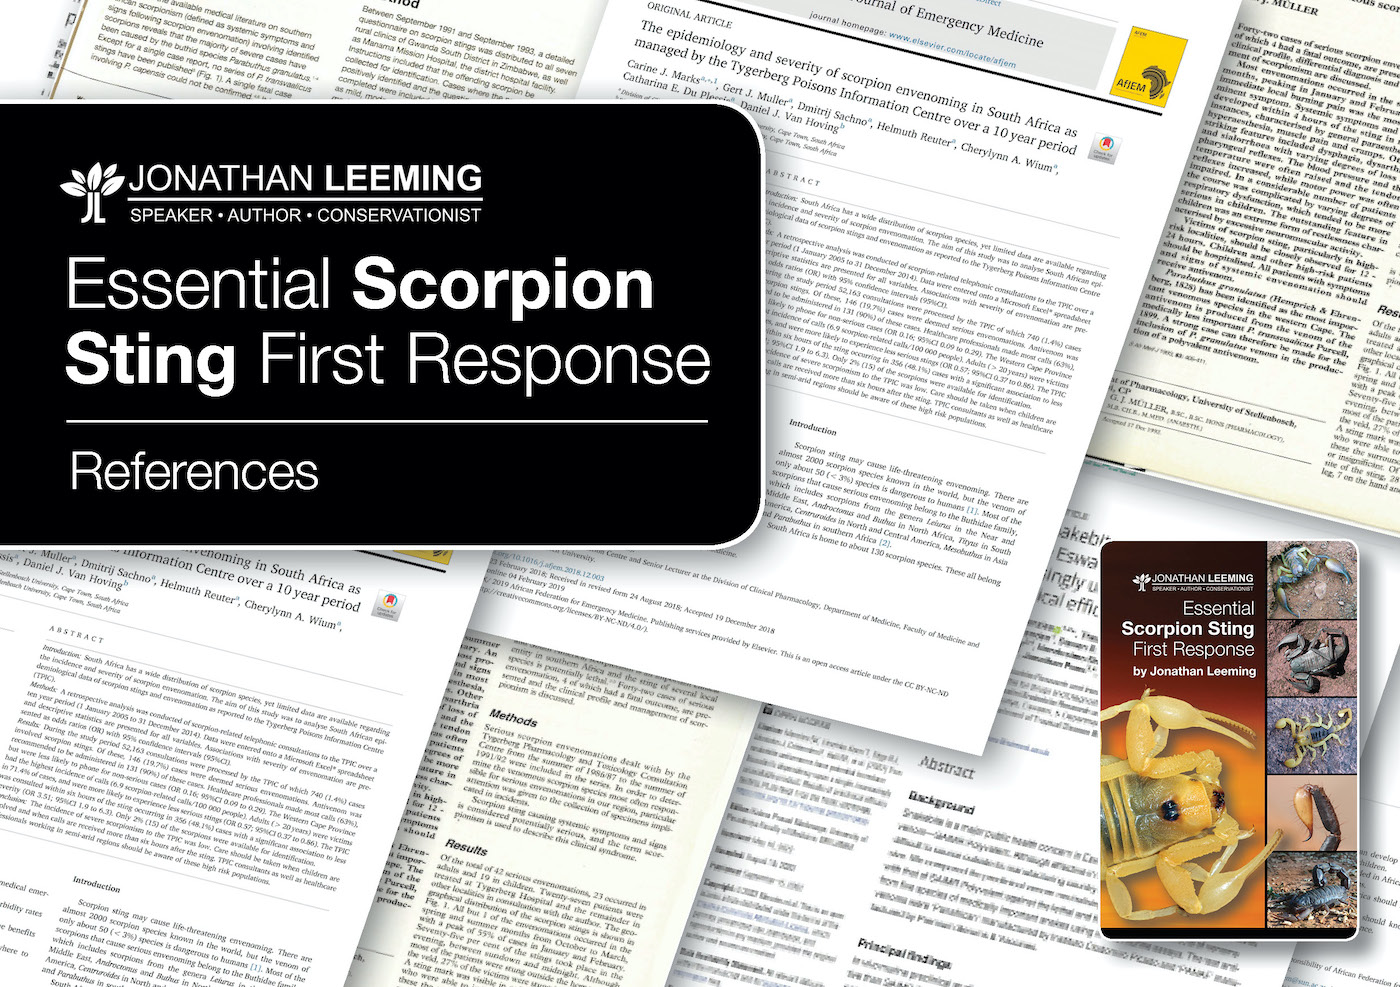 Scorpion sting first response references